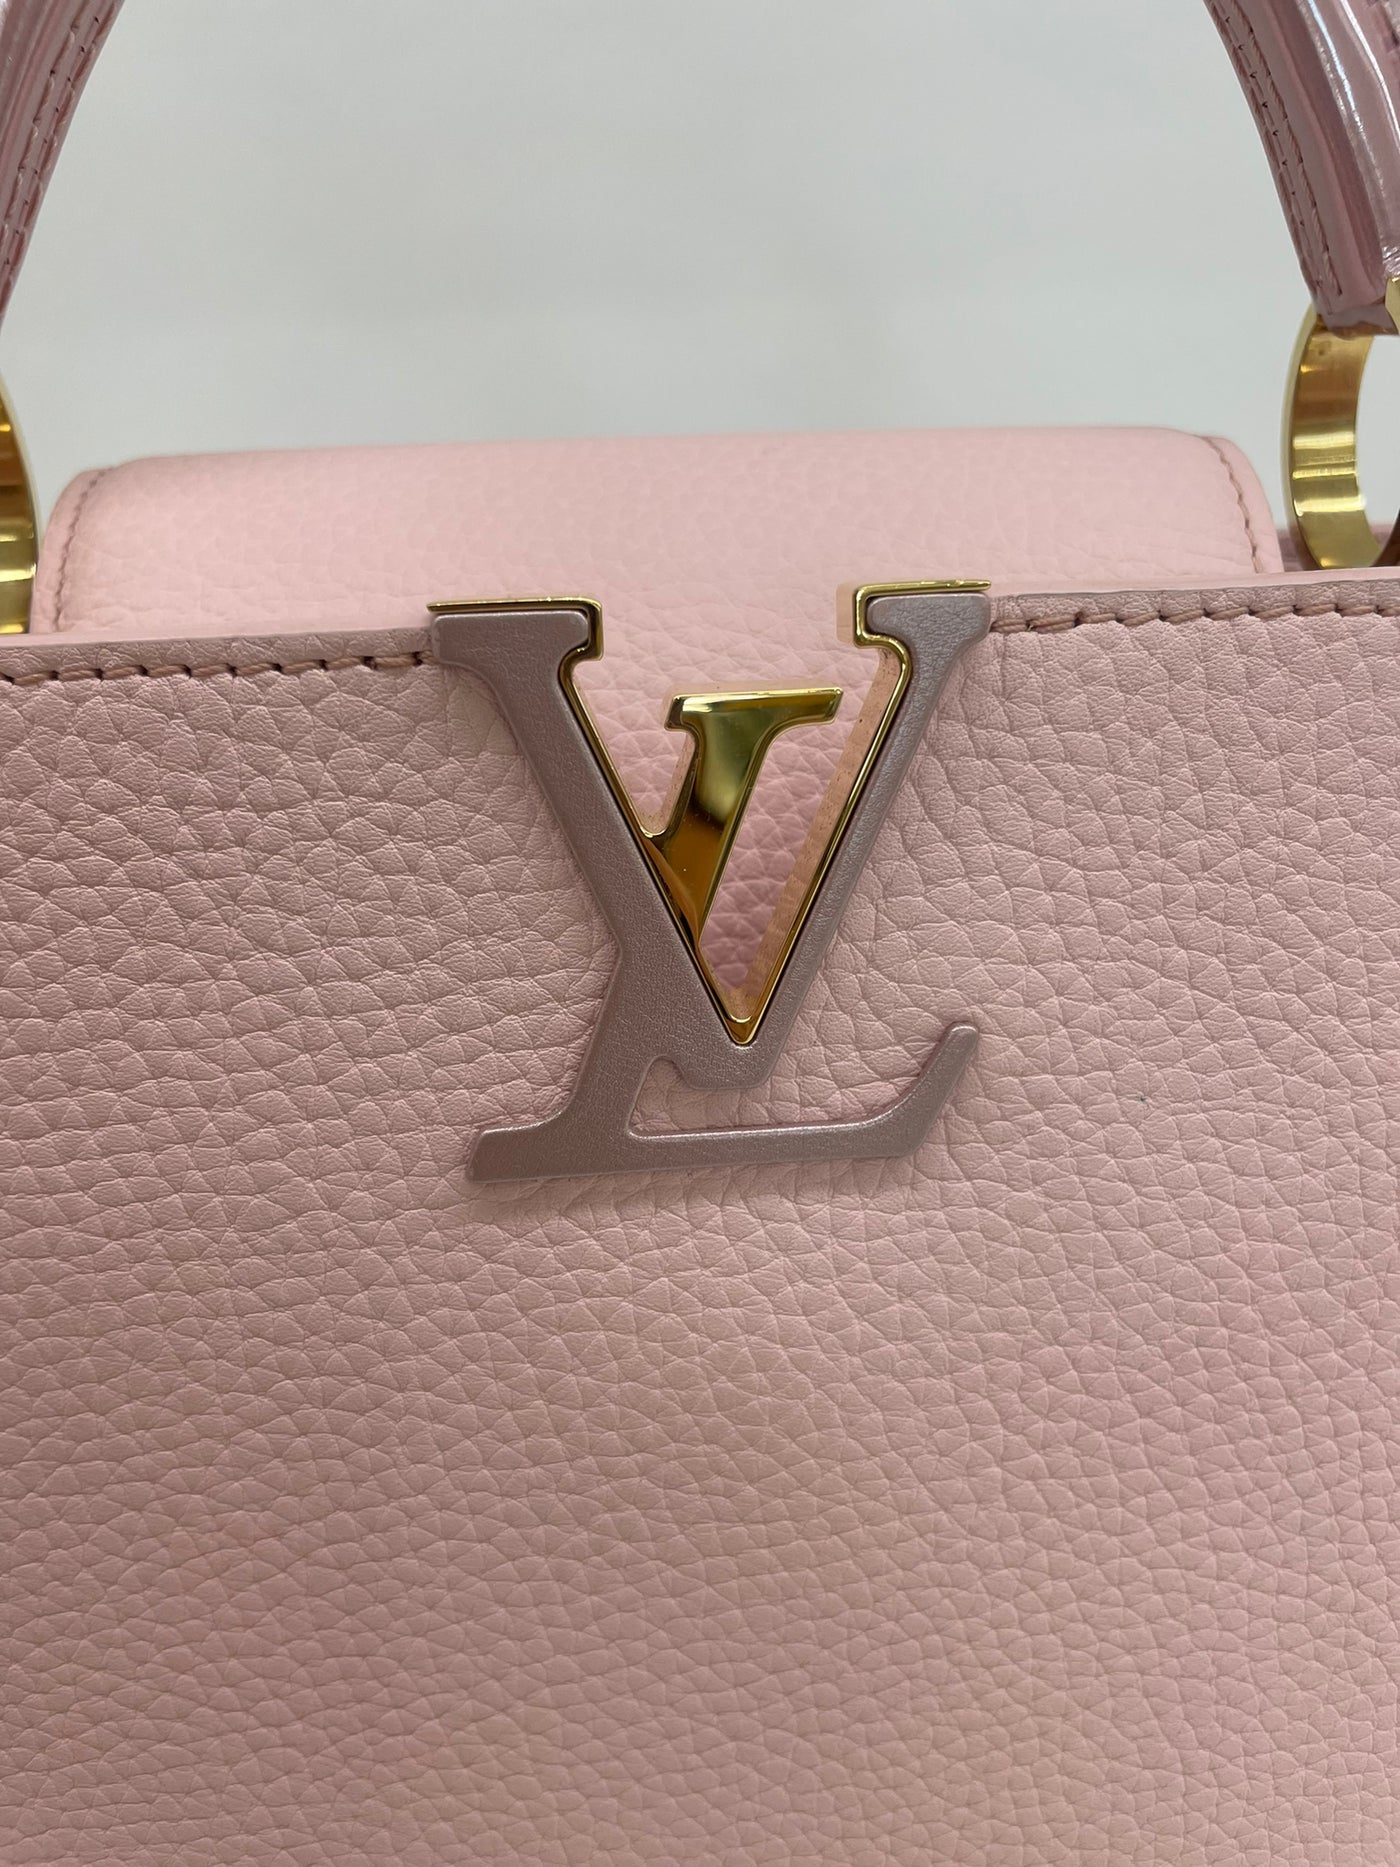 Louis Vuitton Capucine BB - Baby Pink